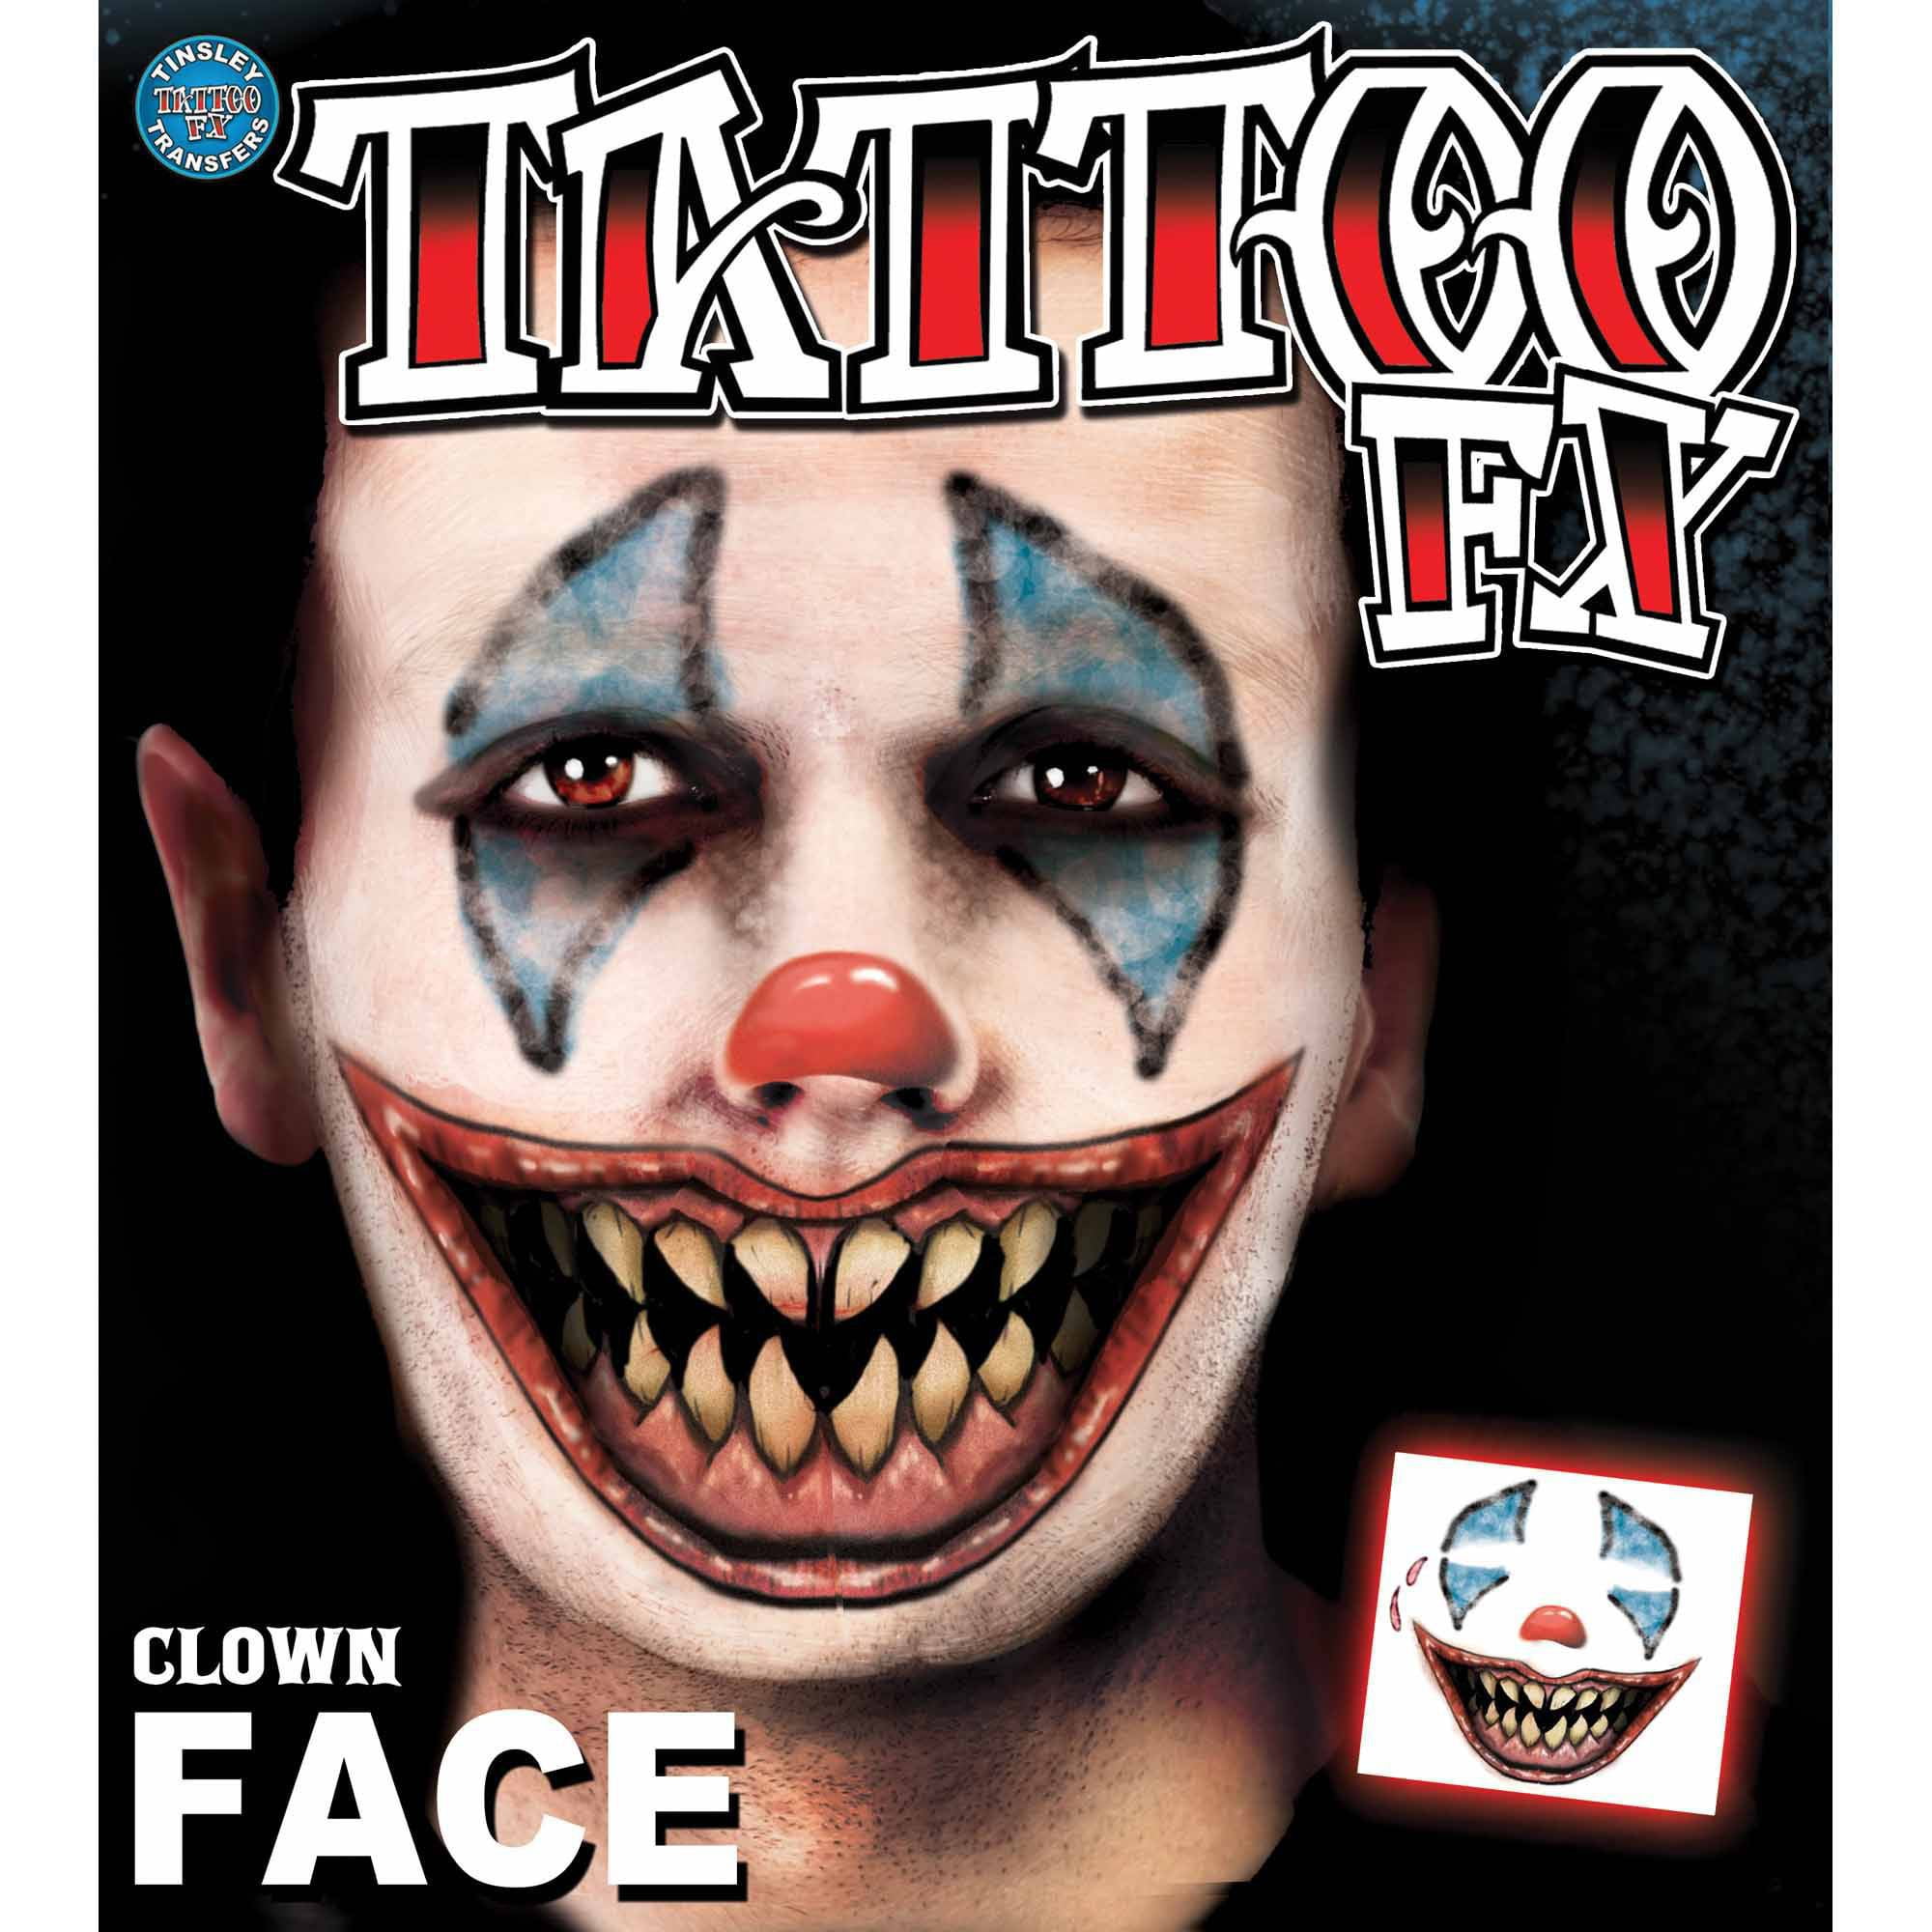 Sad clown face can be interesting tattoo